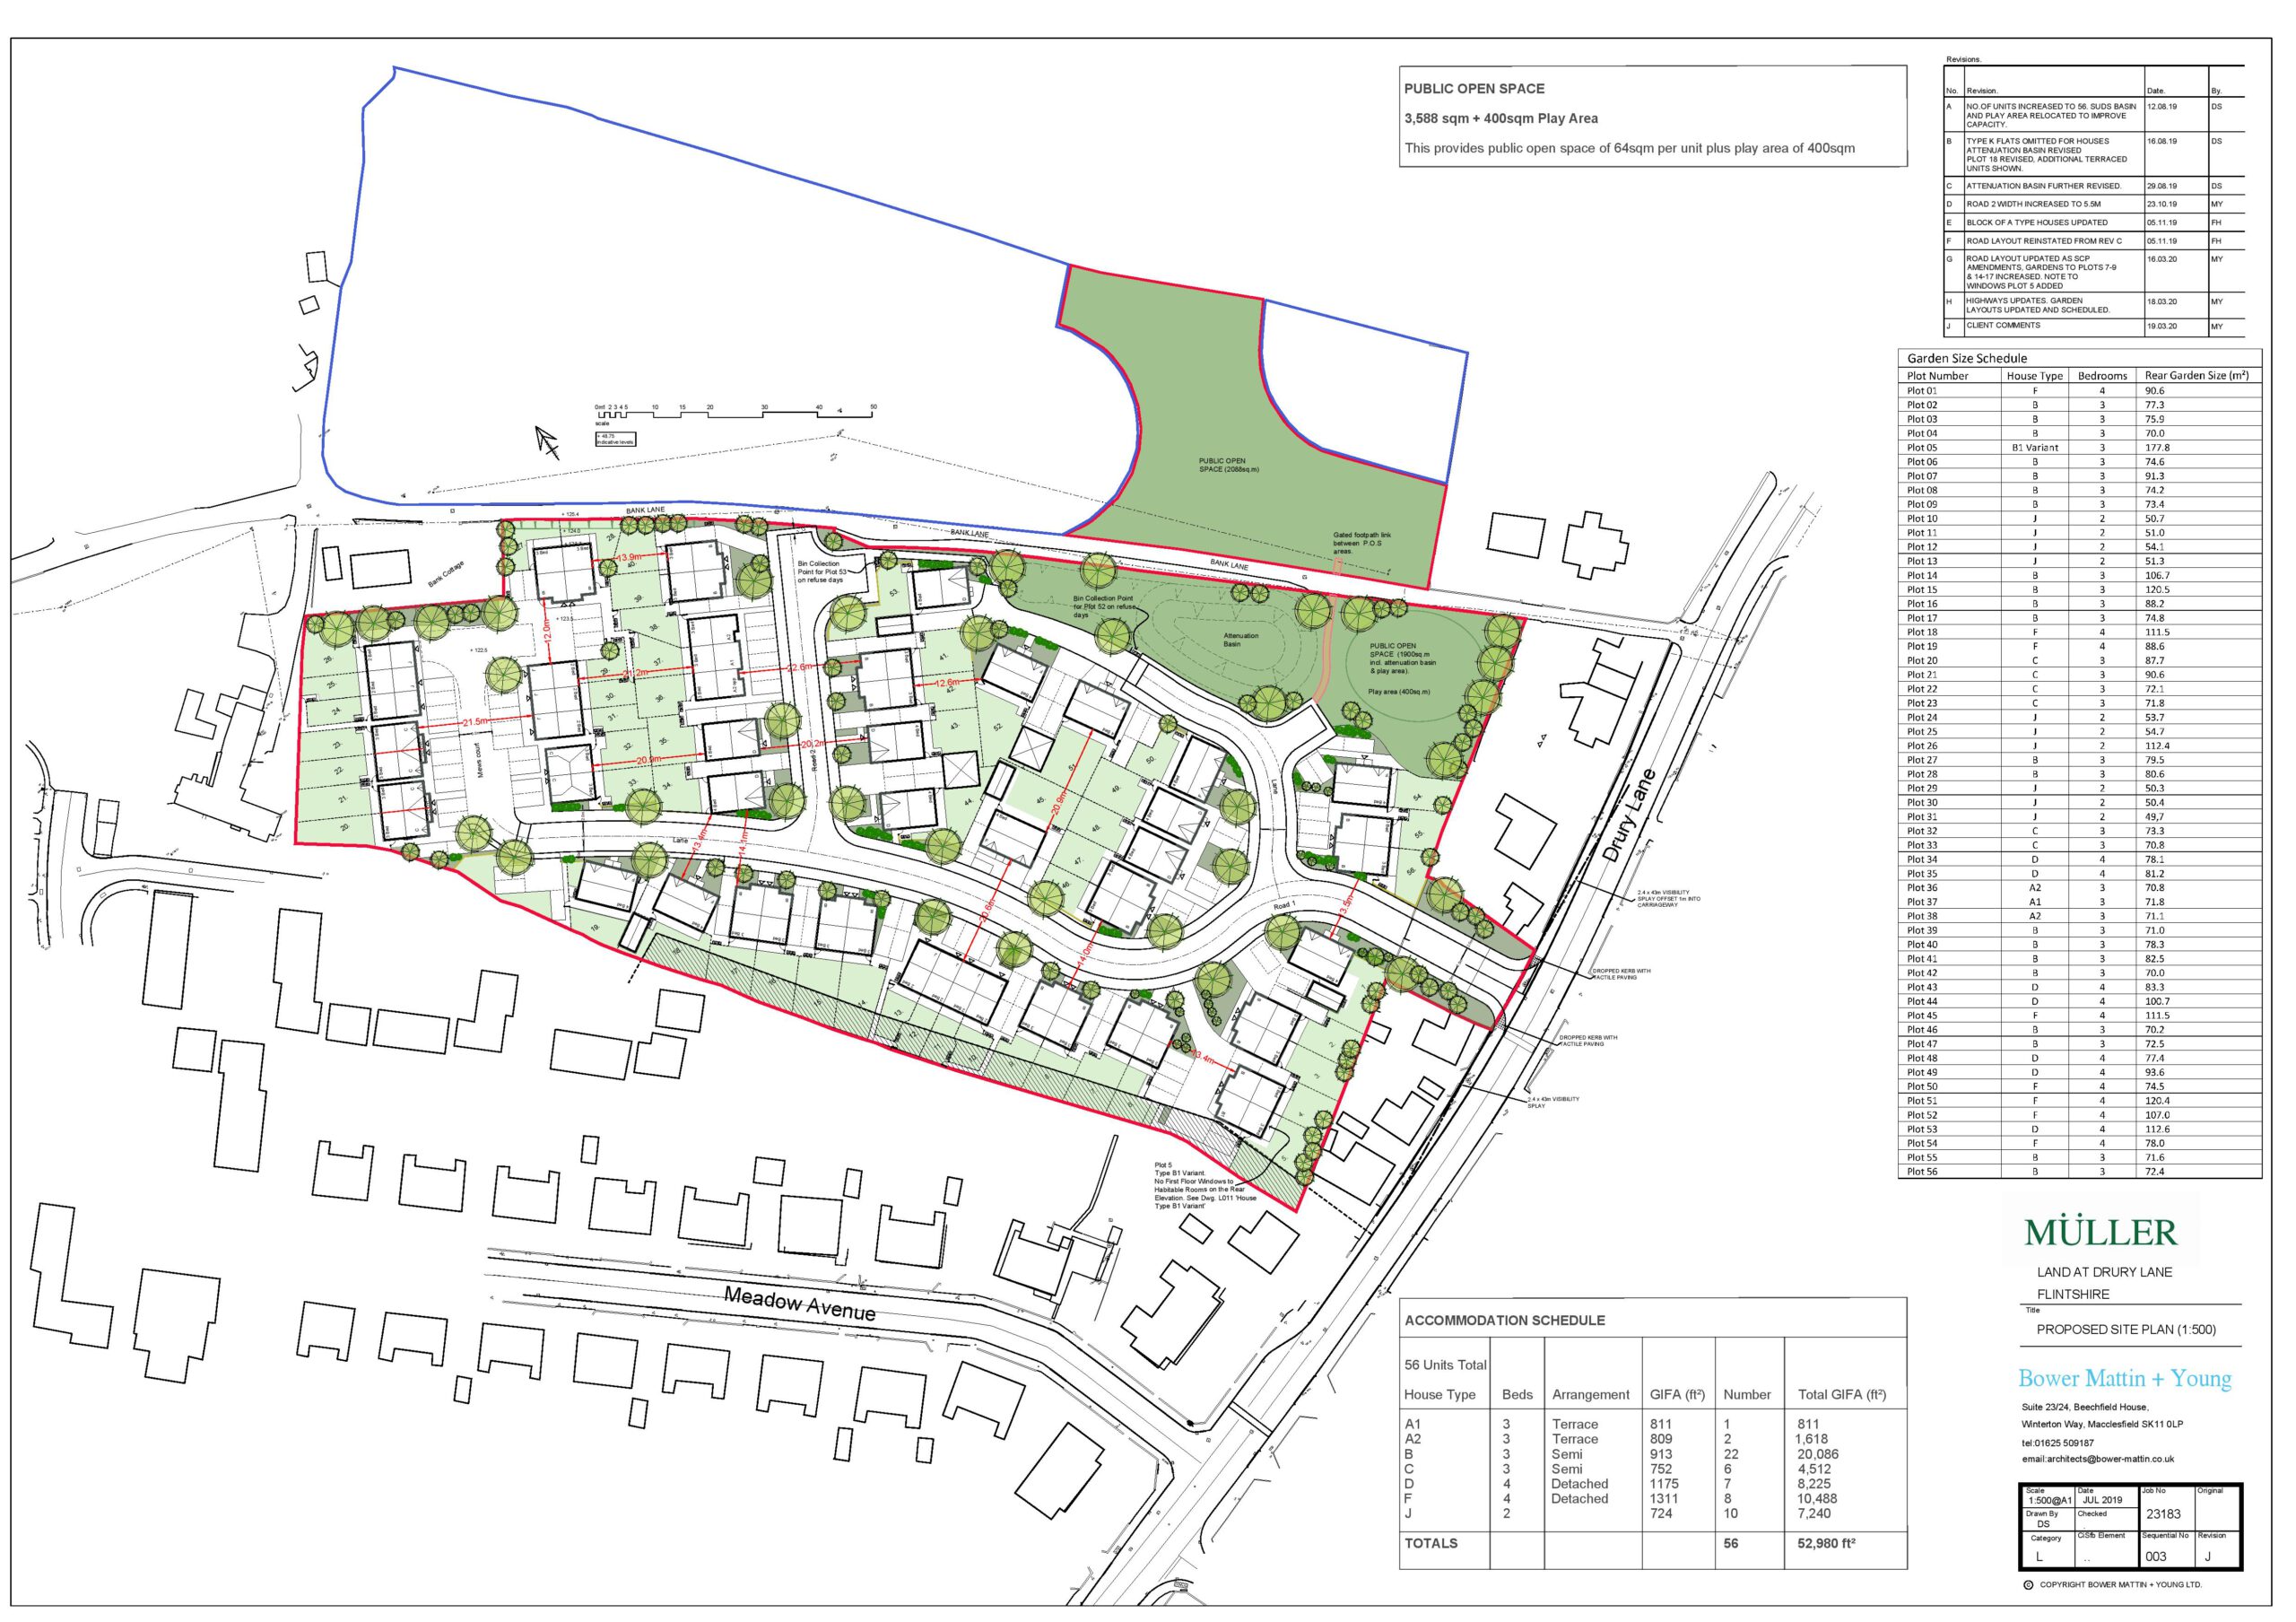 Muller Proposed Site Plan Flintshire